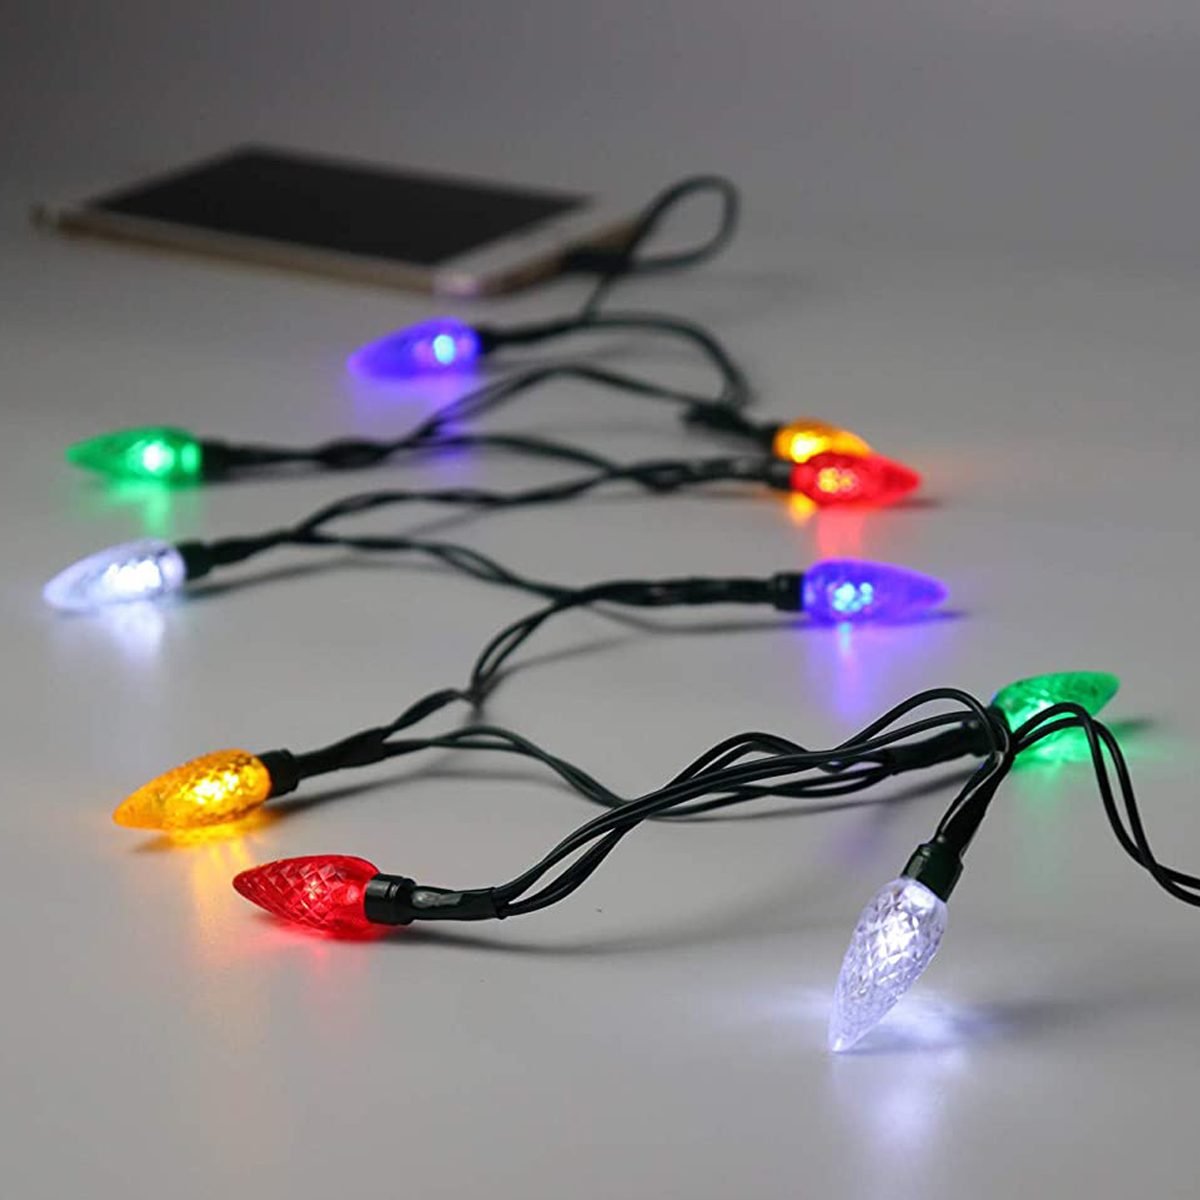 Sq Cewuidy Led Christmas Lights Charging Cable Ecomm Amazon.com